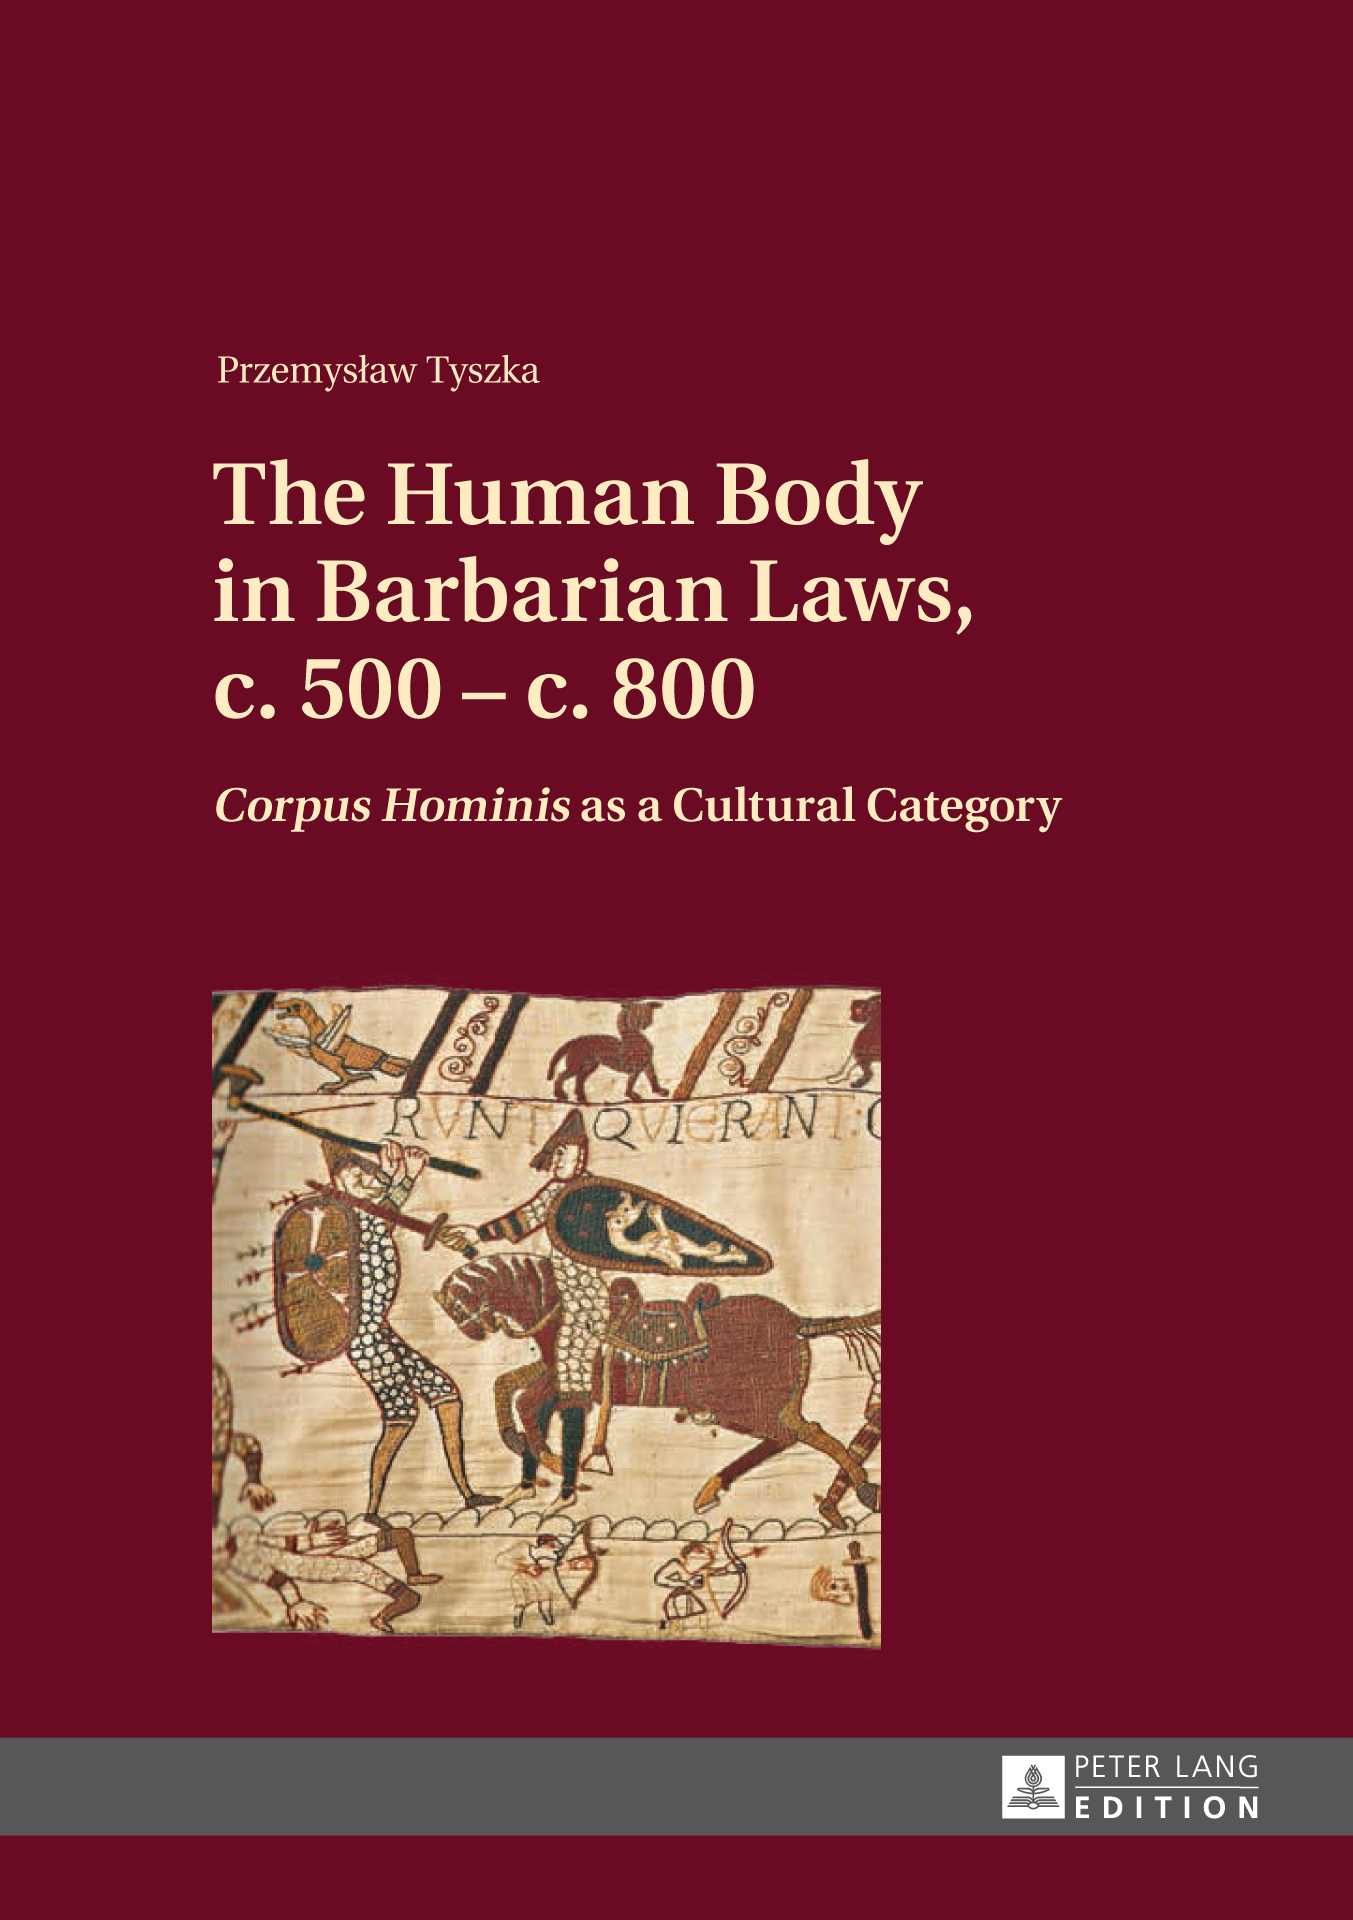 The Human Body in Barbarian Laws, c. 500 – c. 800 - 50-99.99